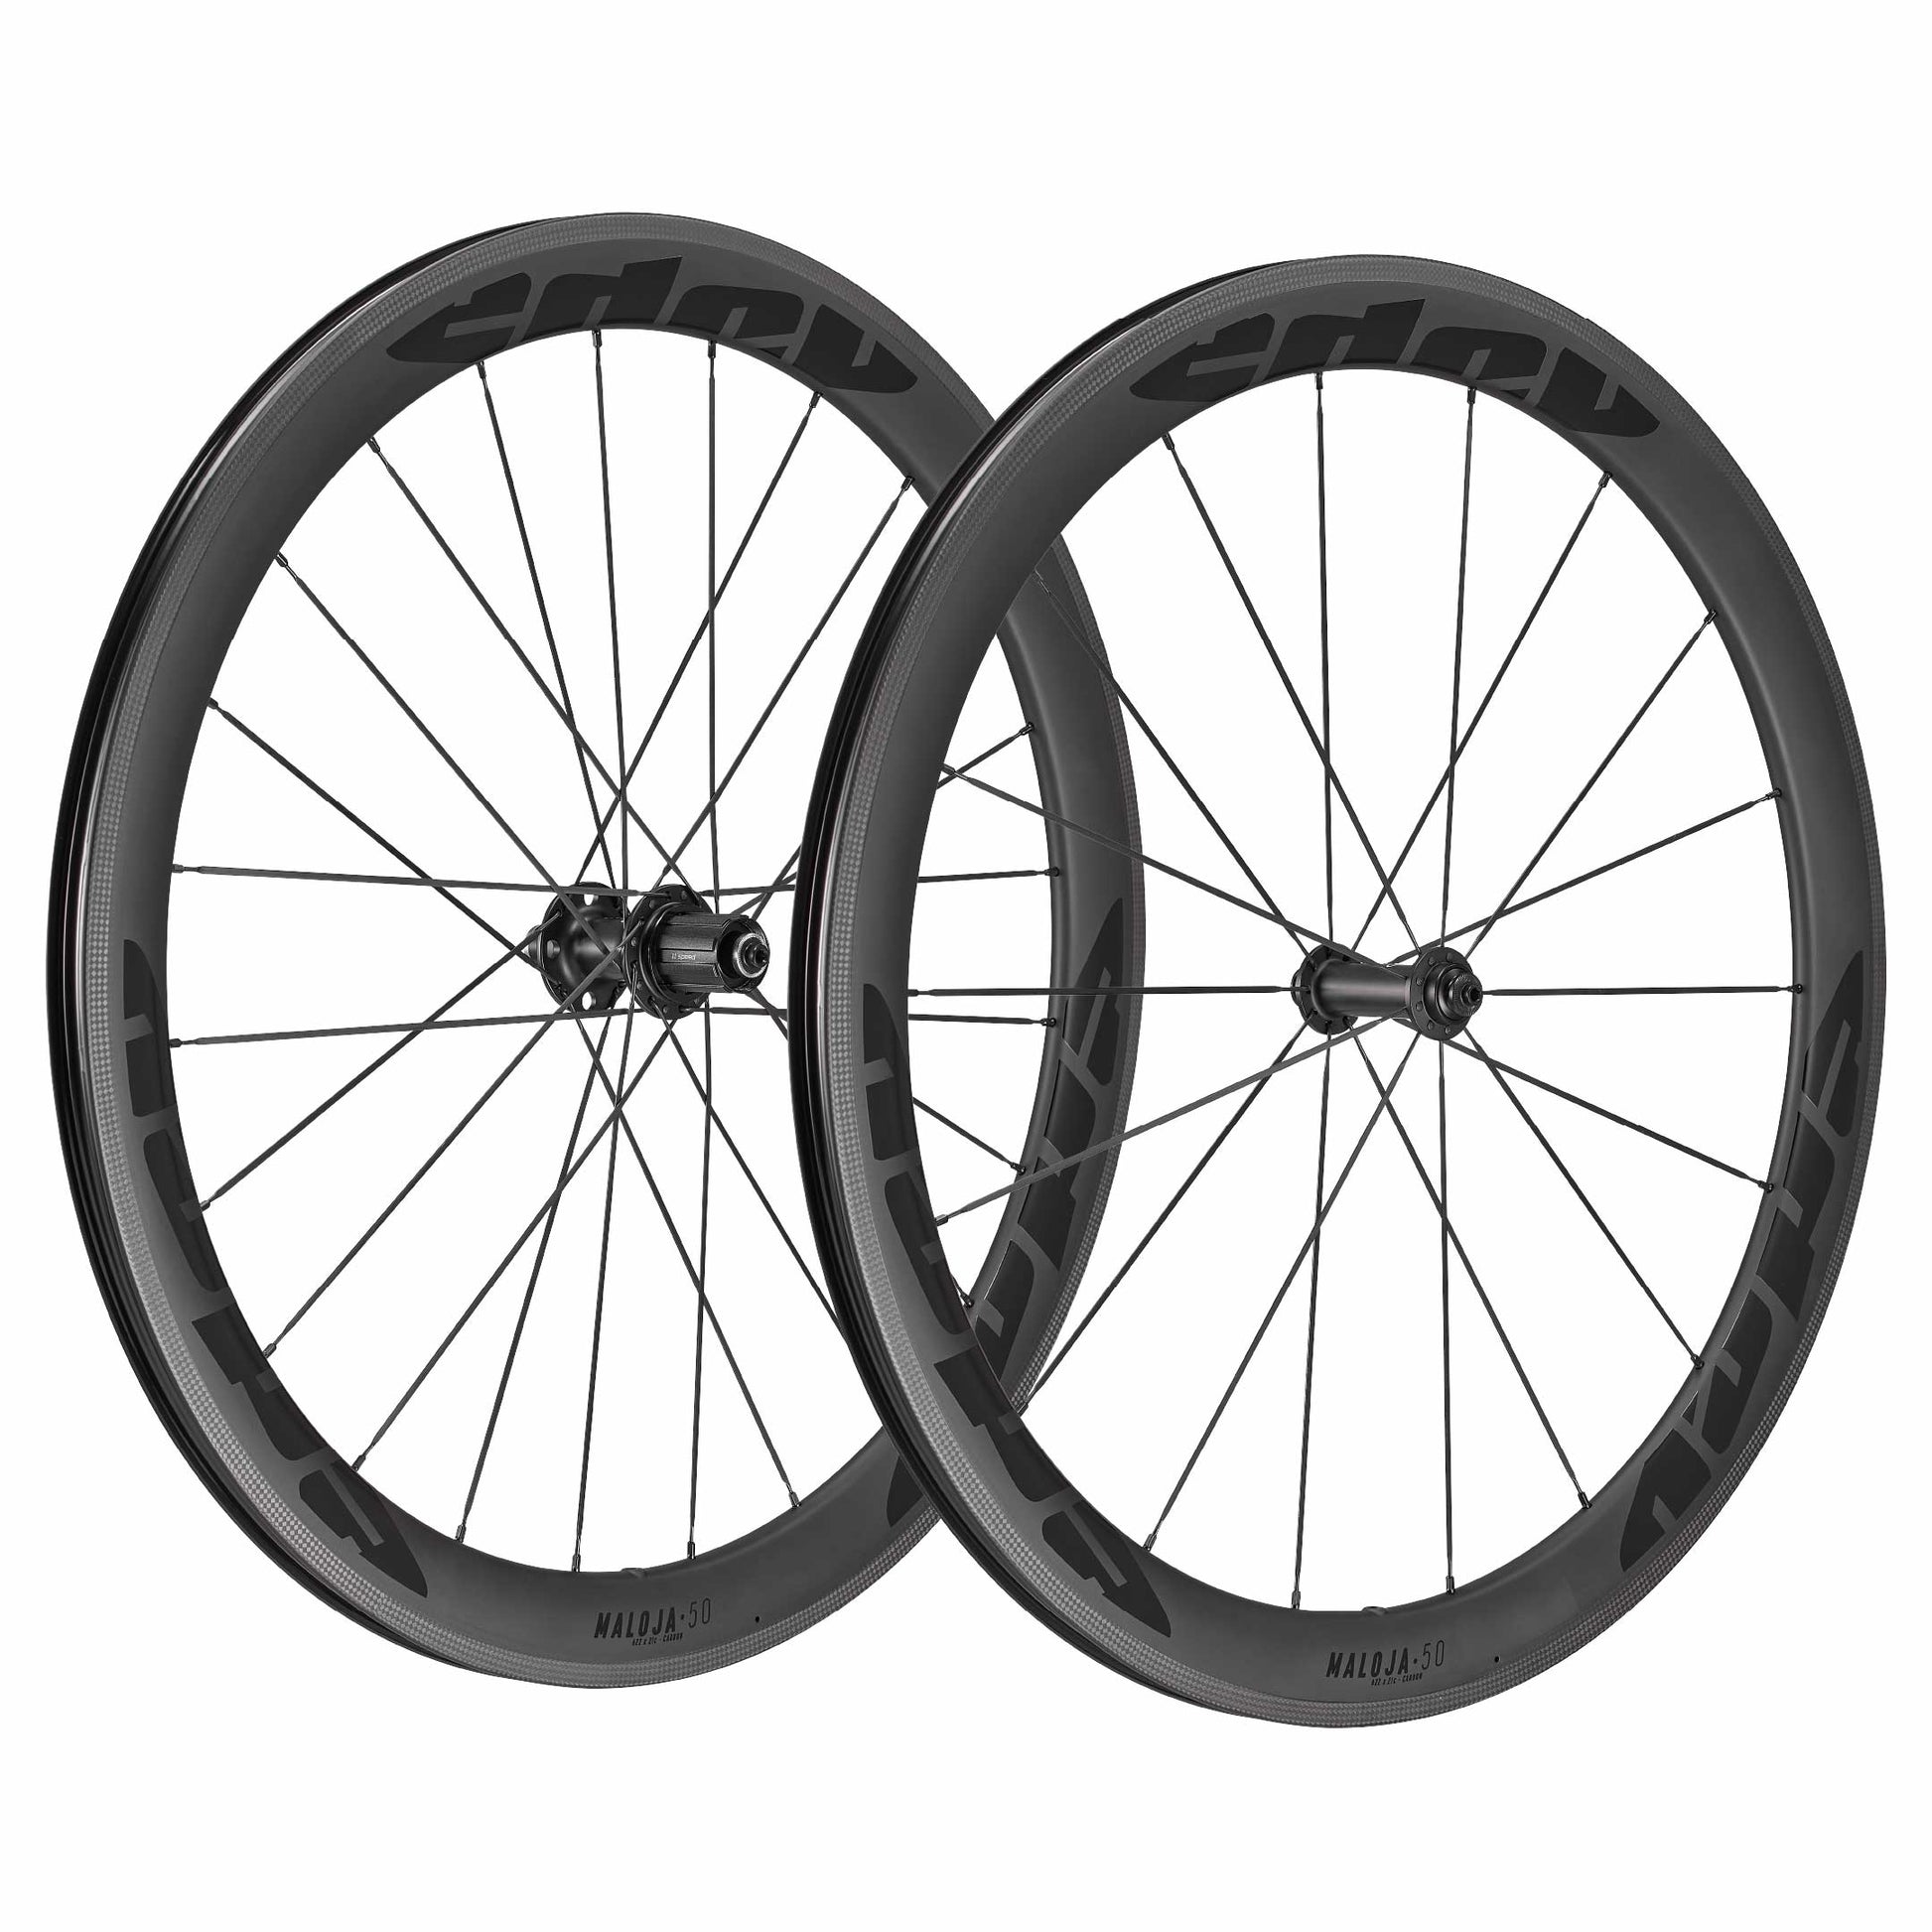 50mm deep carbon fibre wheelset in rim brake with black logos